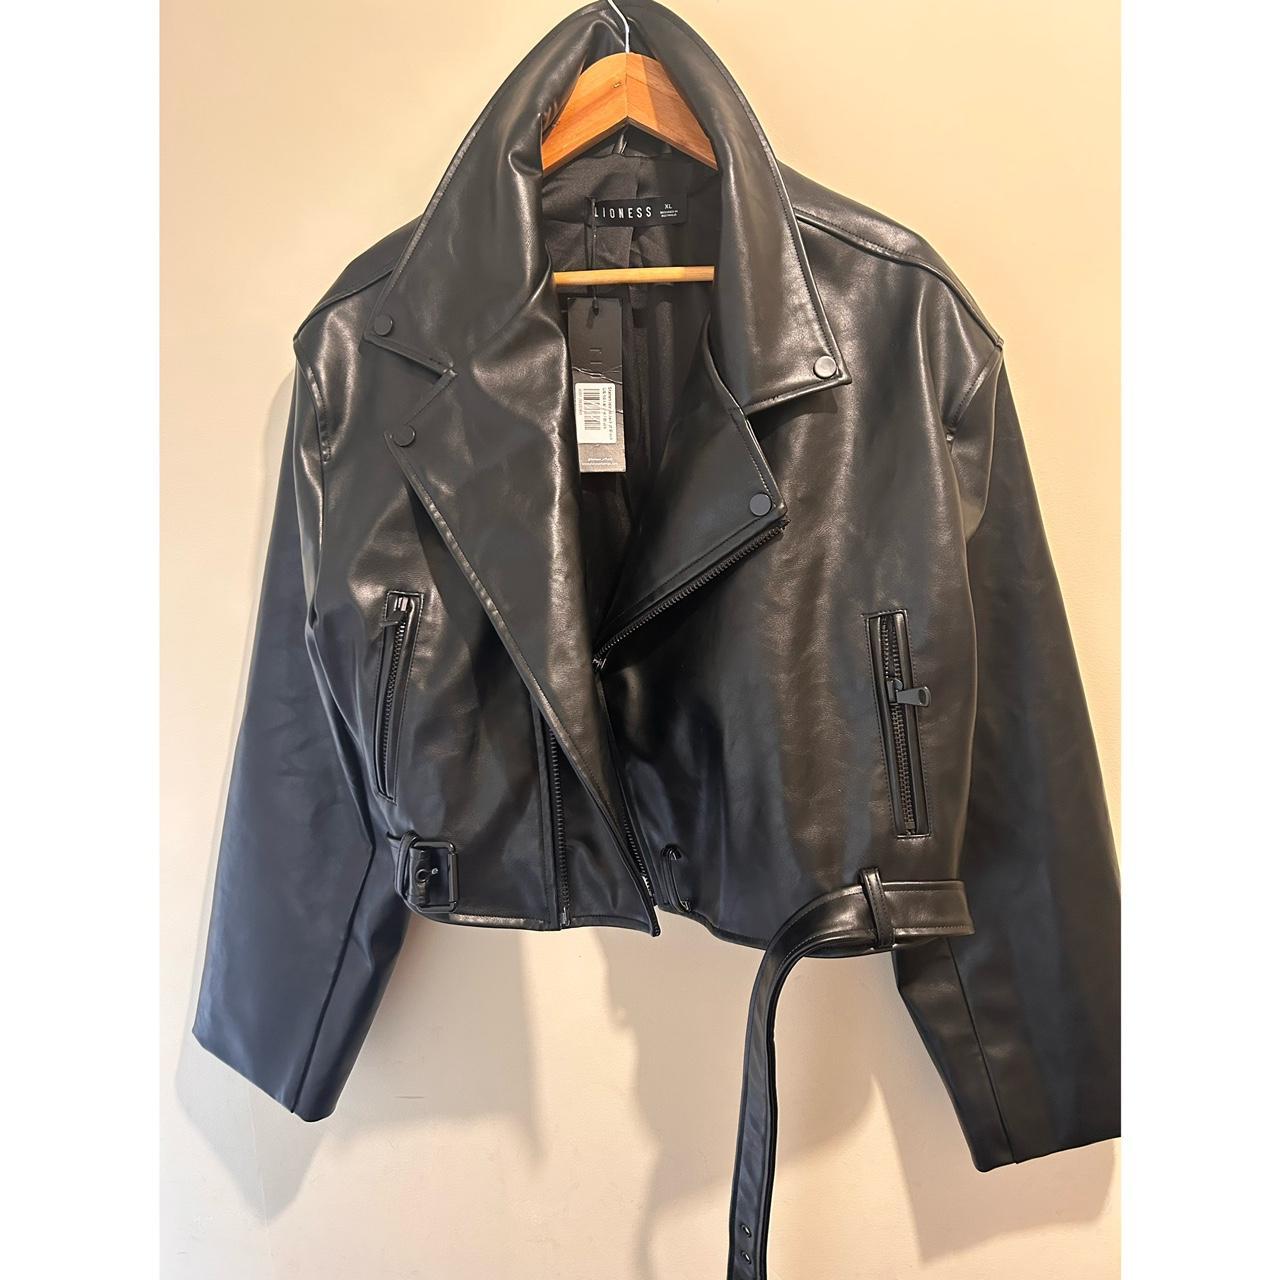 Lioness cropped faux leather jacket, Size XL (AU14),... - Depop